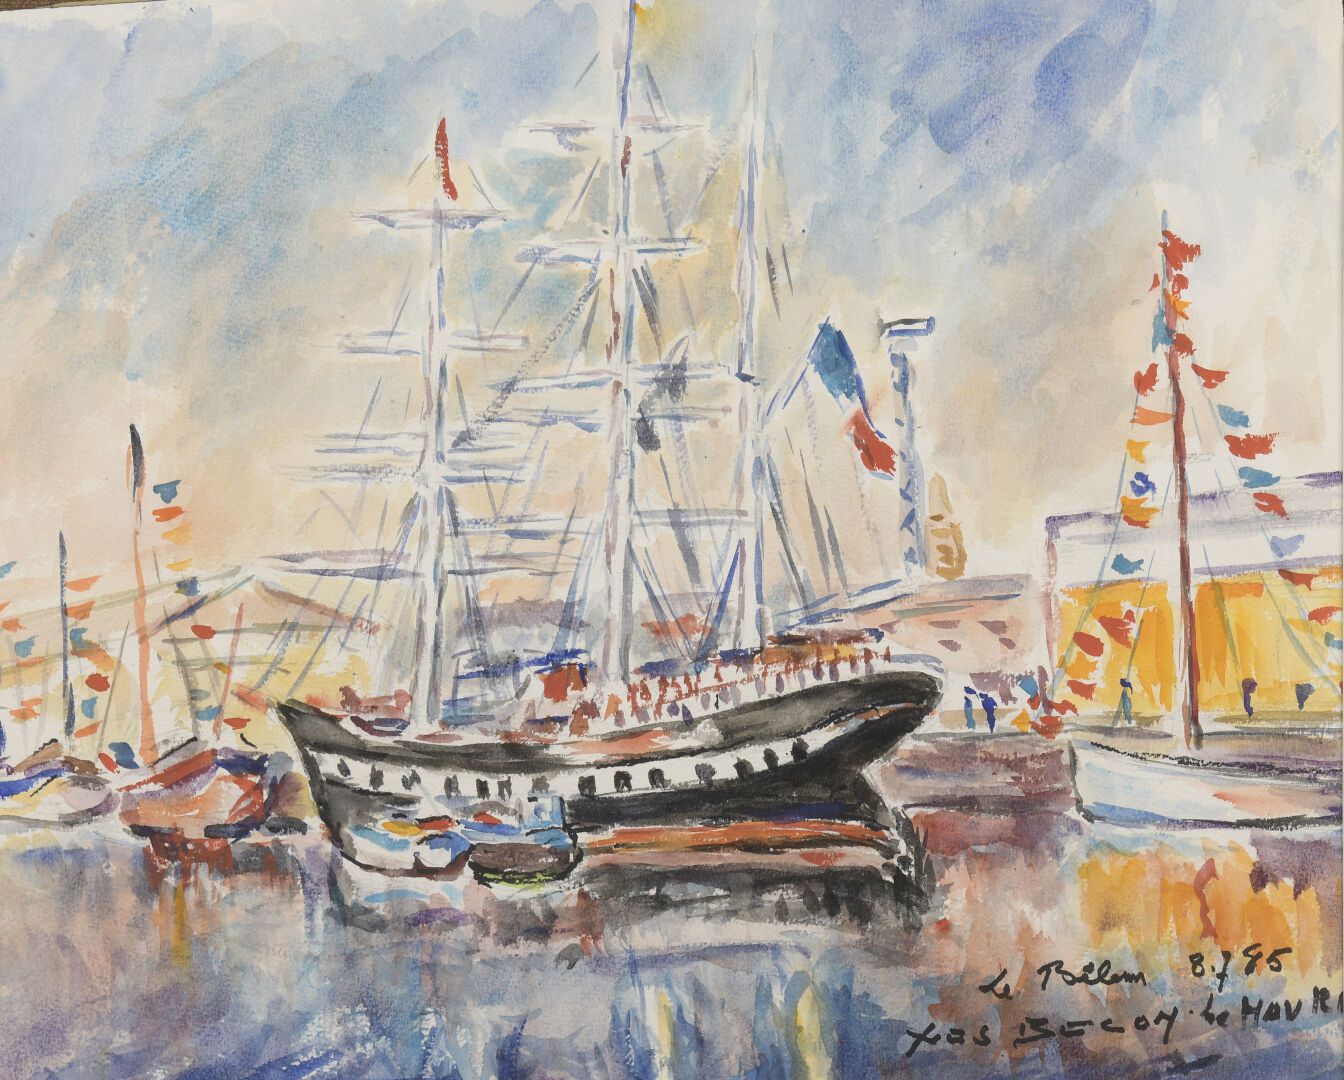 Null Yves BECON (1907-2004)

勒阿弗尔的贝伦号（船在港口），8-7-85

右下角有签名、位置、标题和日期的水彩画

42 x 51&hellip;